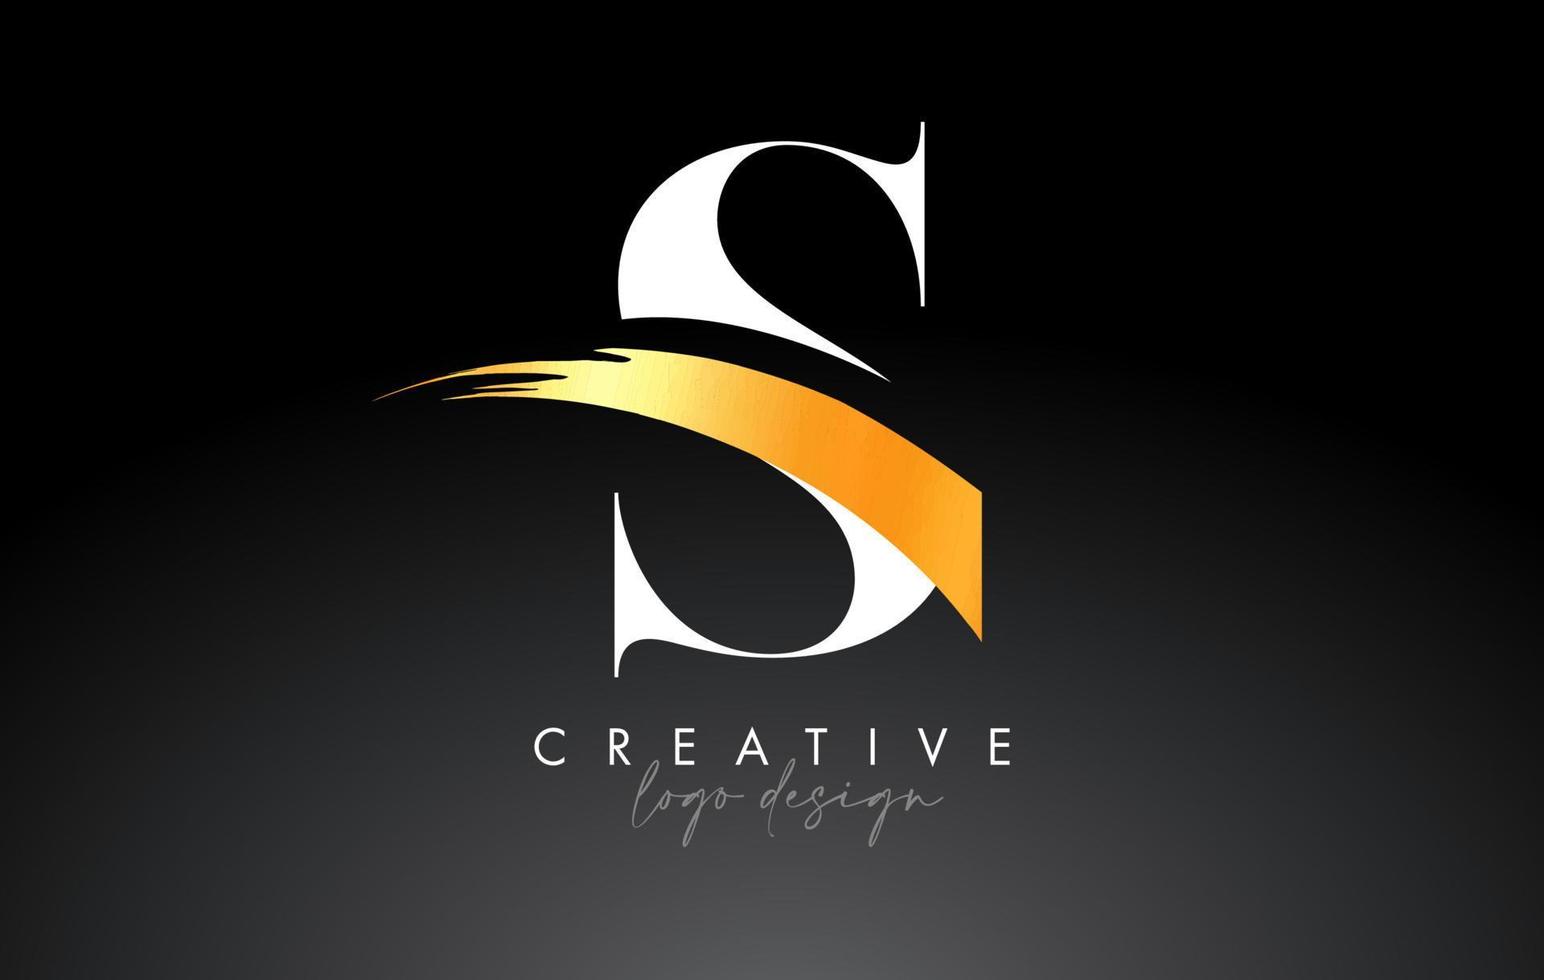 Golden Brush Letter S Logo Design with Creative Artistic Paint Brush Stroke and Modern Look Vector